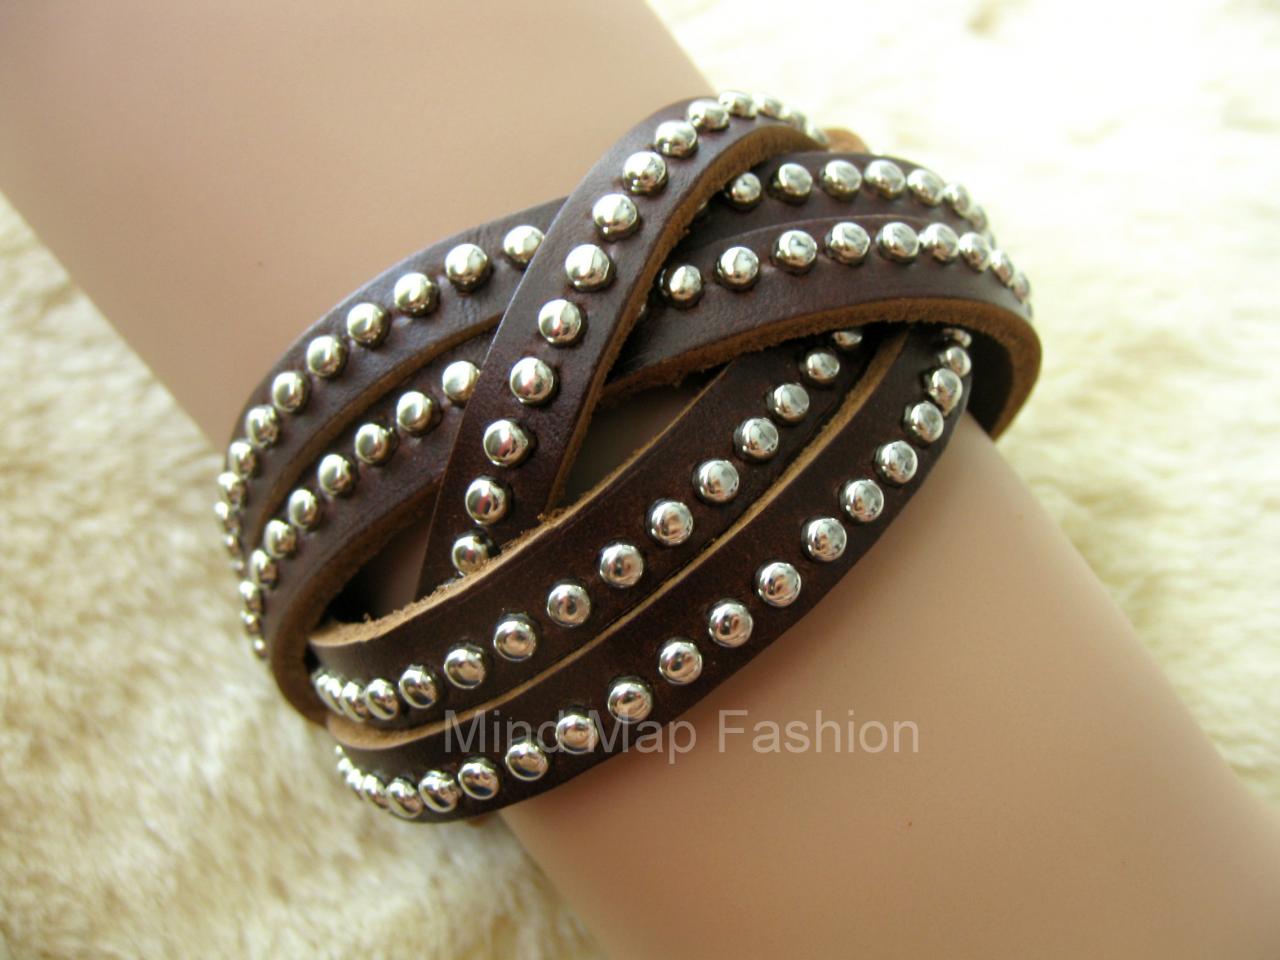 Round Stud Rivet Weave Multi Wrap Leather Snap Bracelet Dark Brown For Women & Men